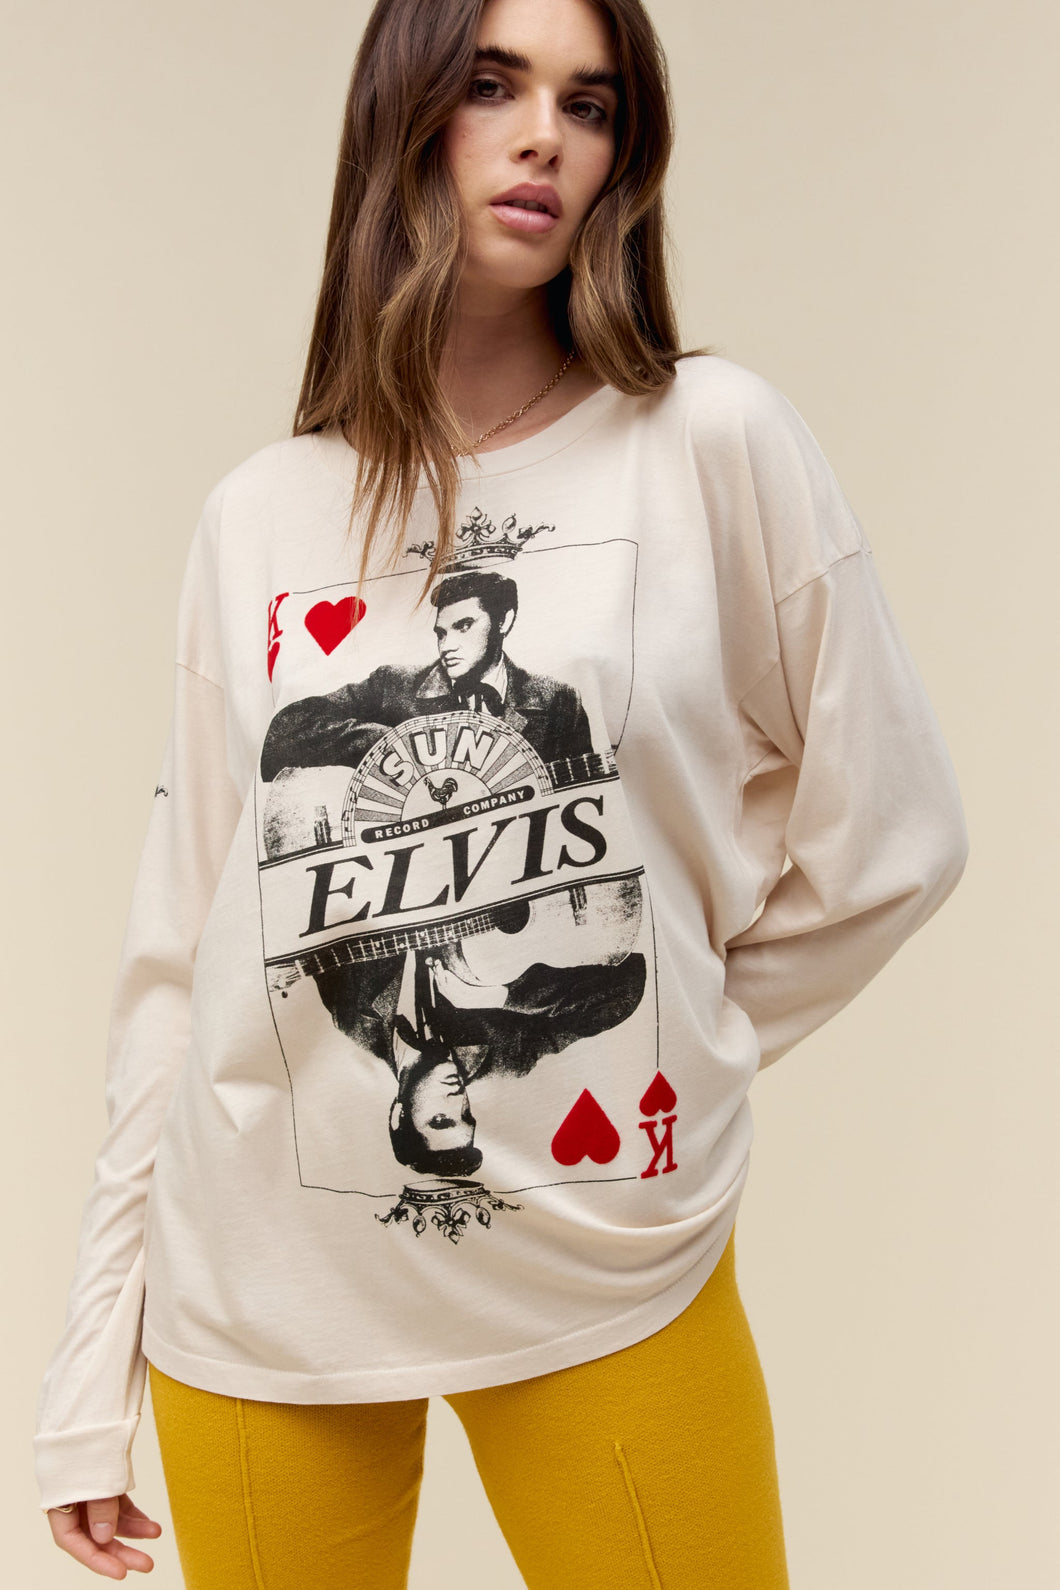 Sun Records X Elvis Presley King of Hearts Long Sleeve